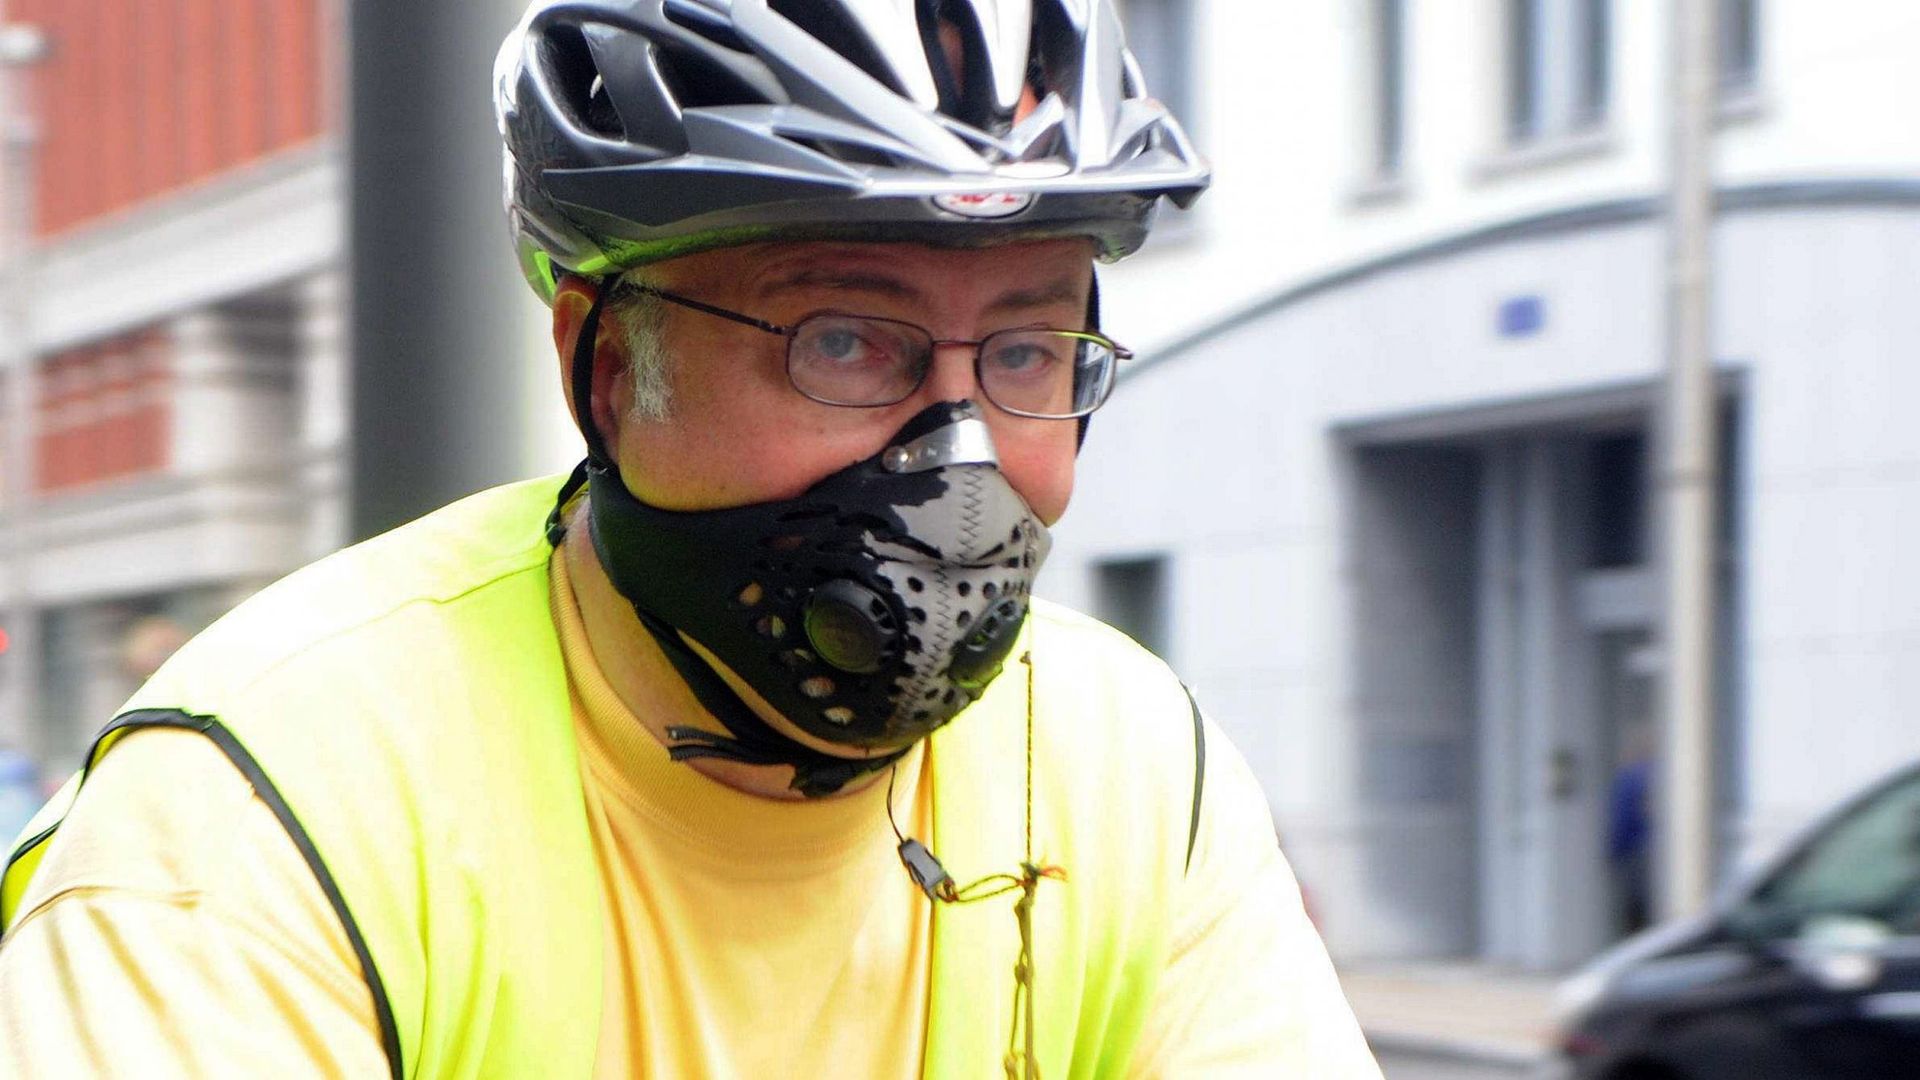 Un cycliste rue Belliard à Bruxelles portant un masque antipollution